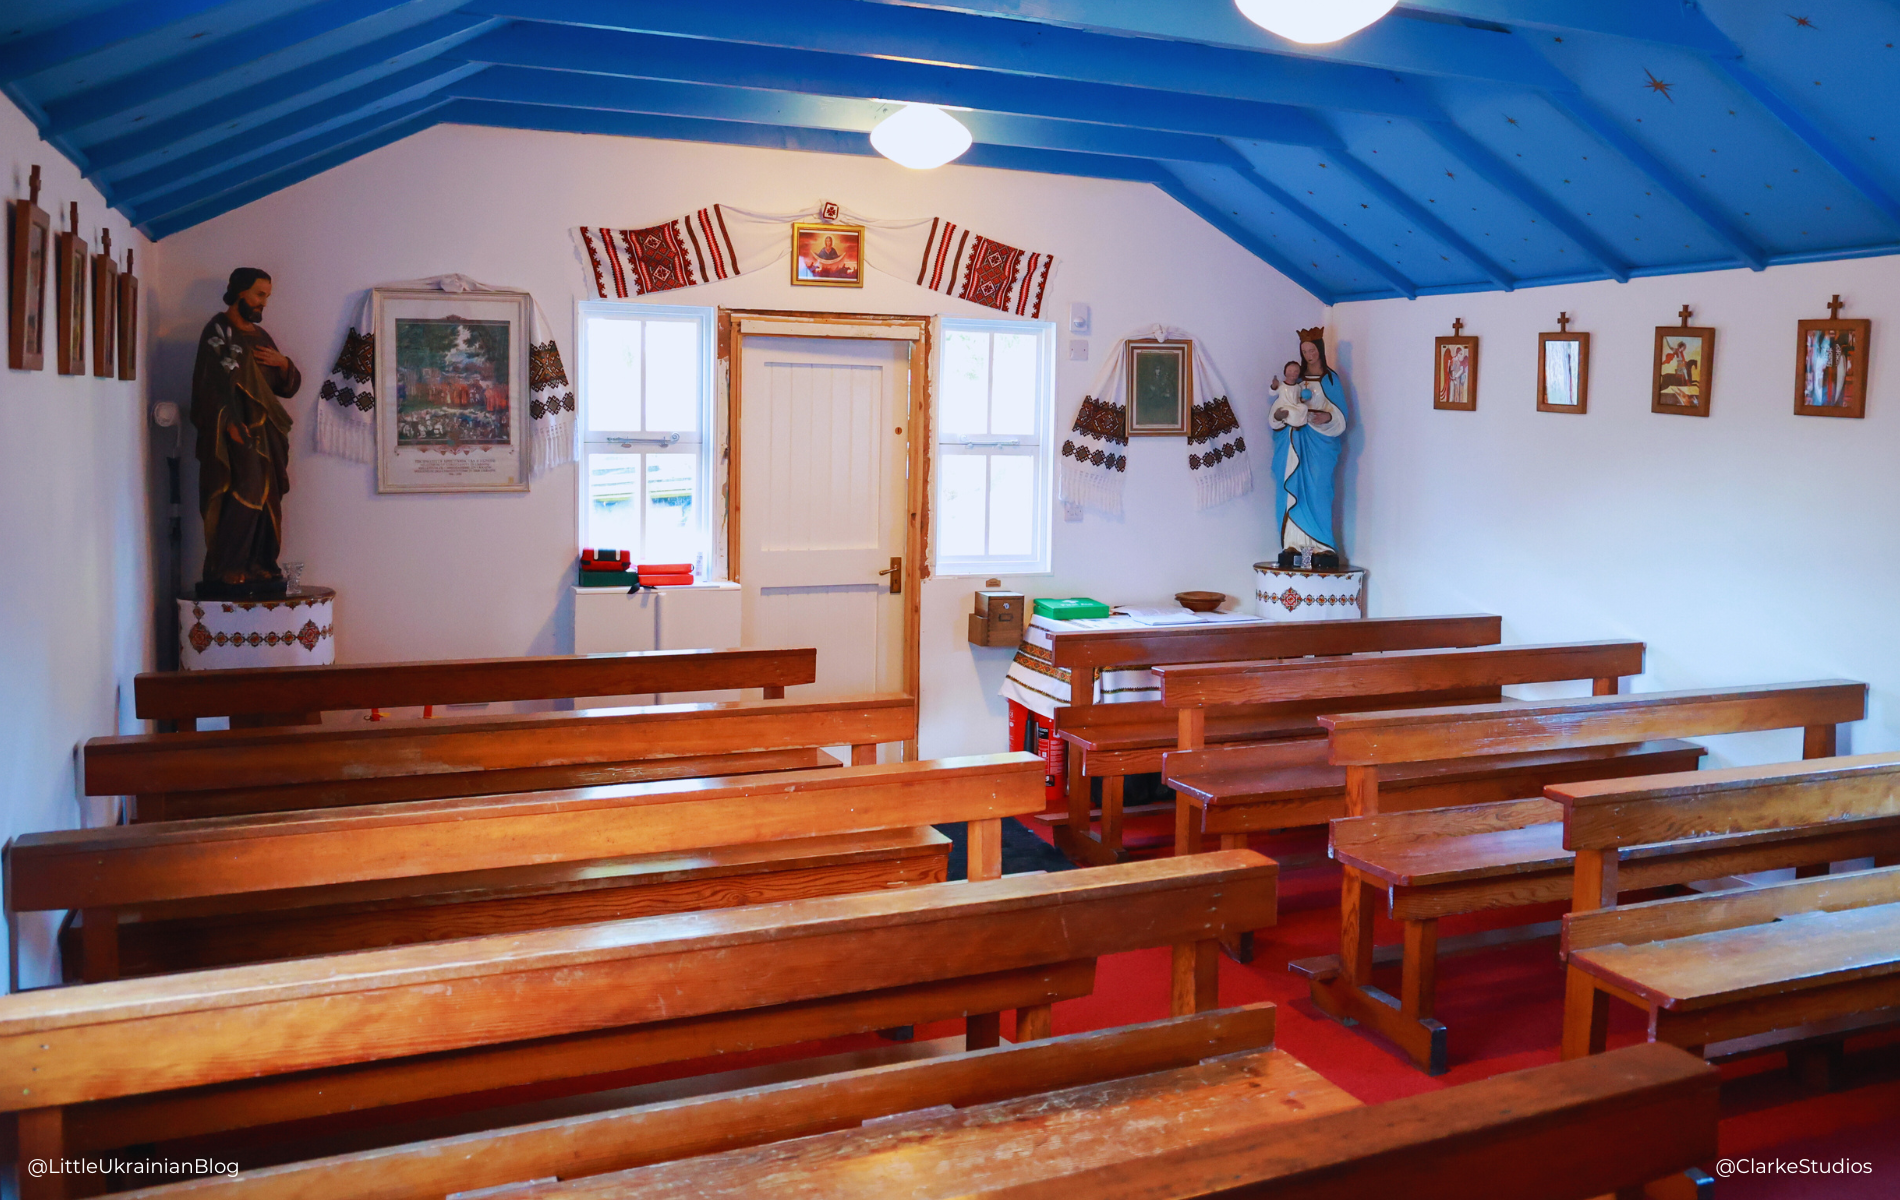 Ukrainian POW Chapel, Little Ukrainian Blog, Ukrainian Chapel, Hallmuir Chapel, Rimini Camp, Lockerbie, Ukrainian Chapel Lockerbie